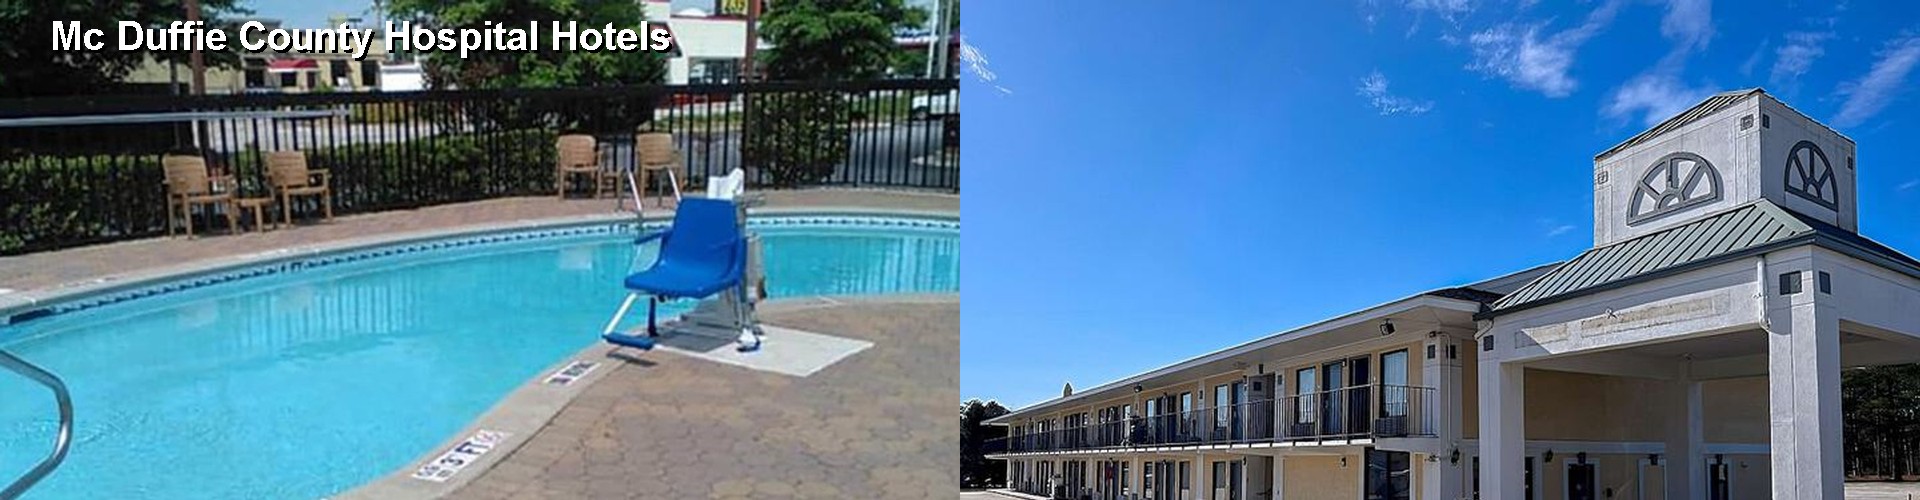 5 Best Hotels near Mc Duffie County Hospital